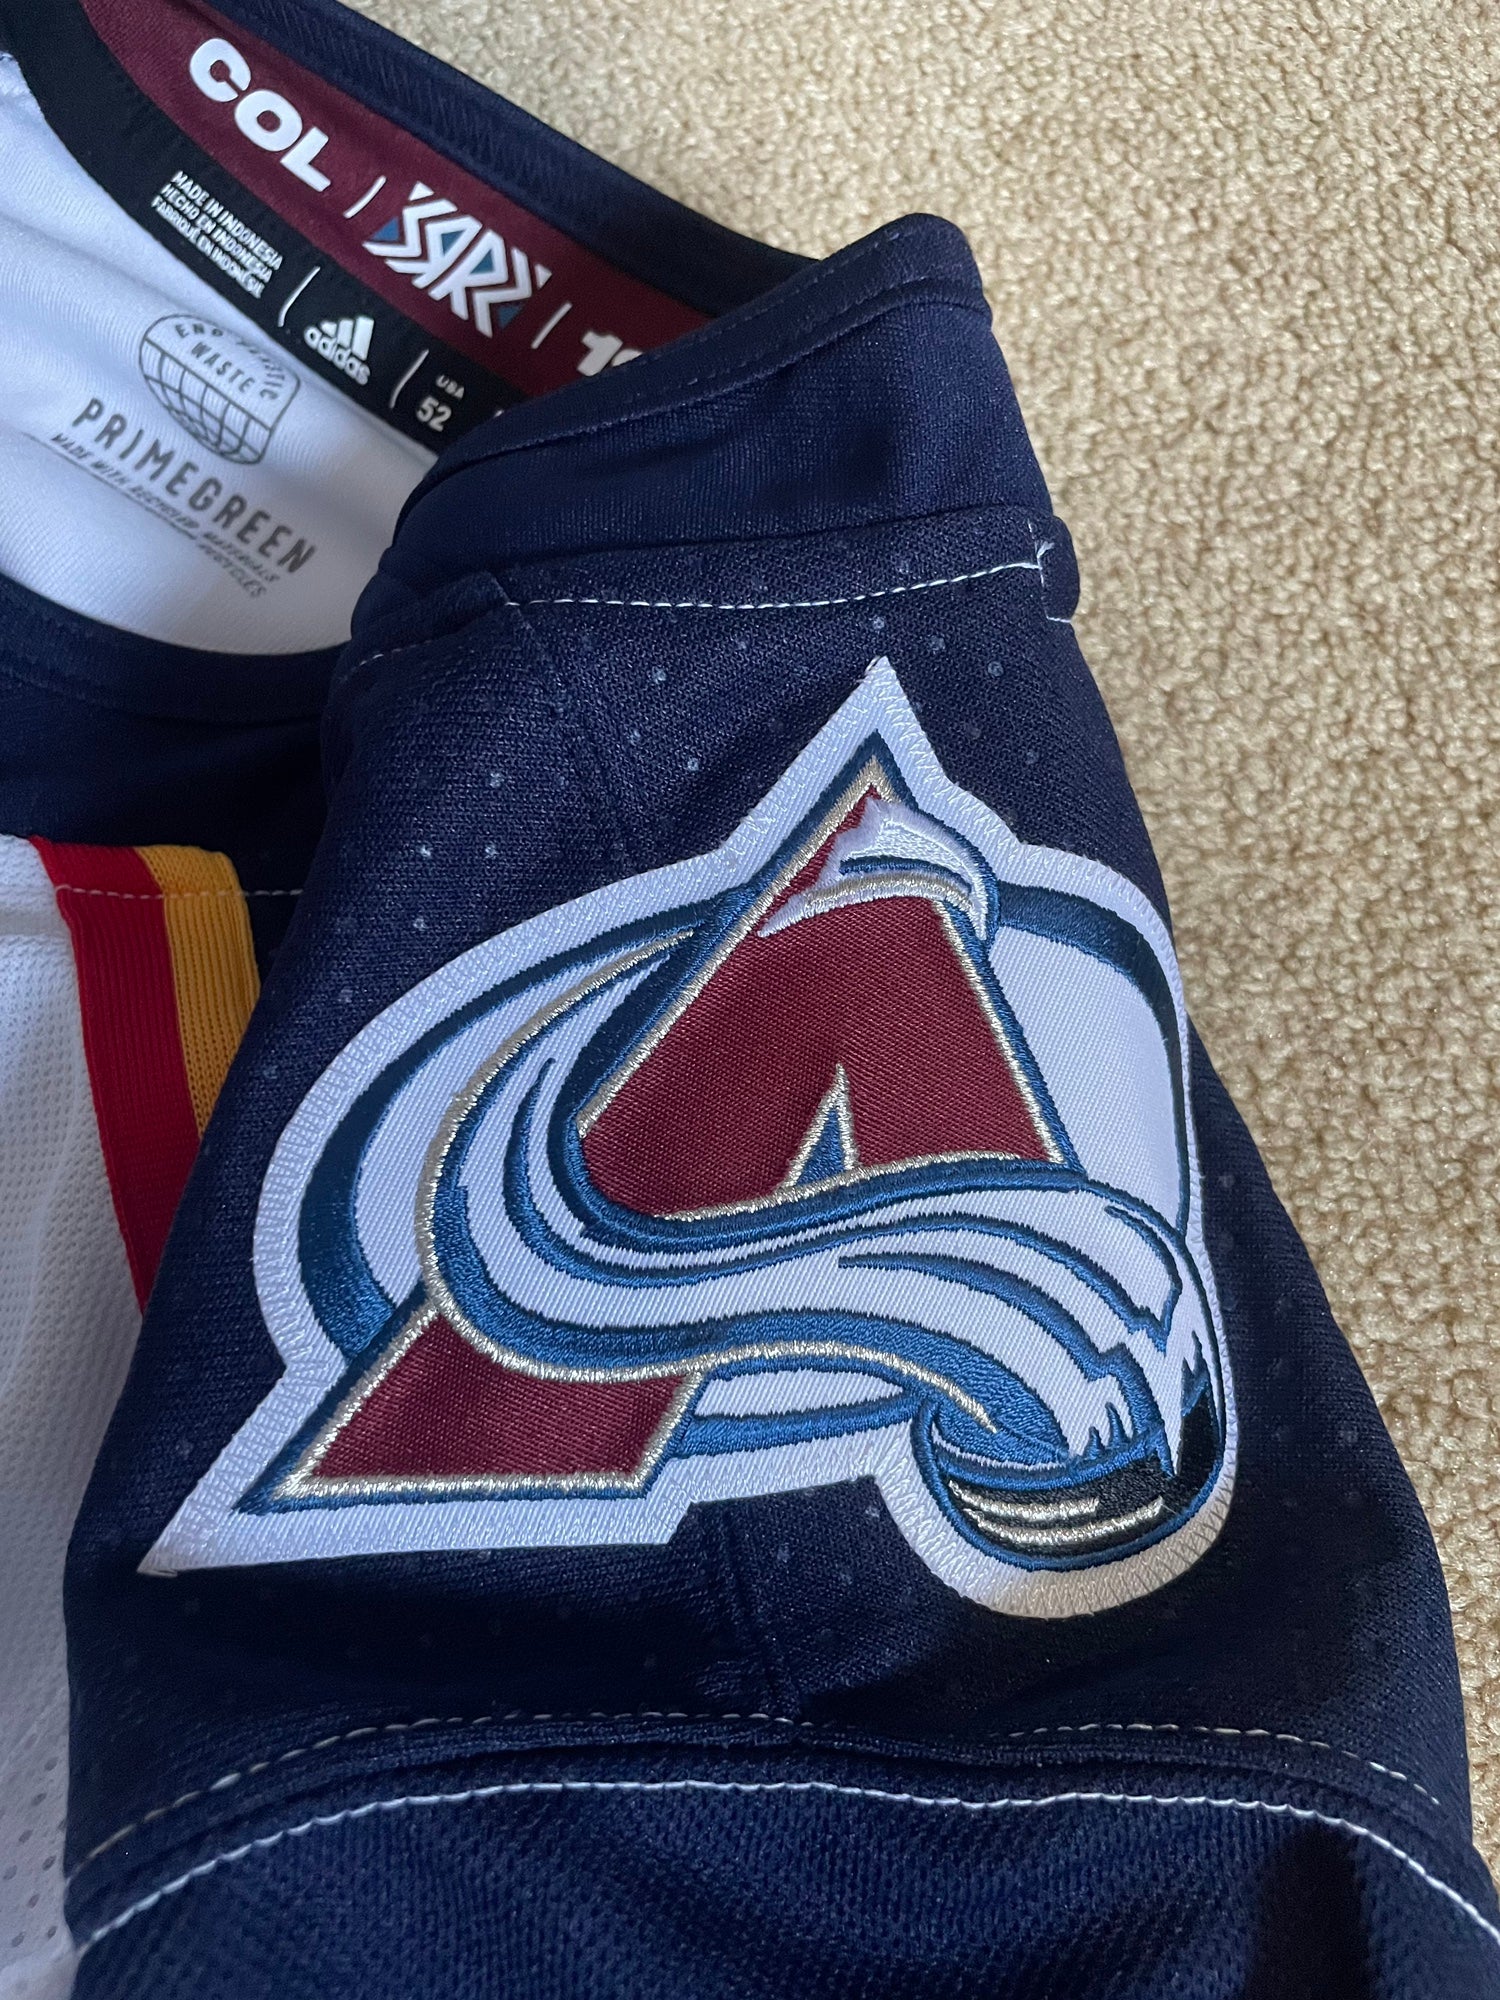 Colorado Avalanche Reverse Retro 2.0 Adidas Authentic NHL Hockey Jersey  Size 52